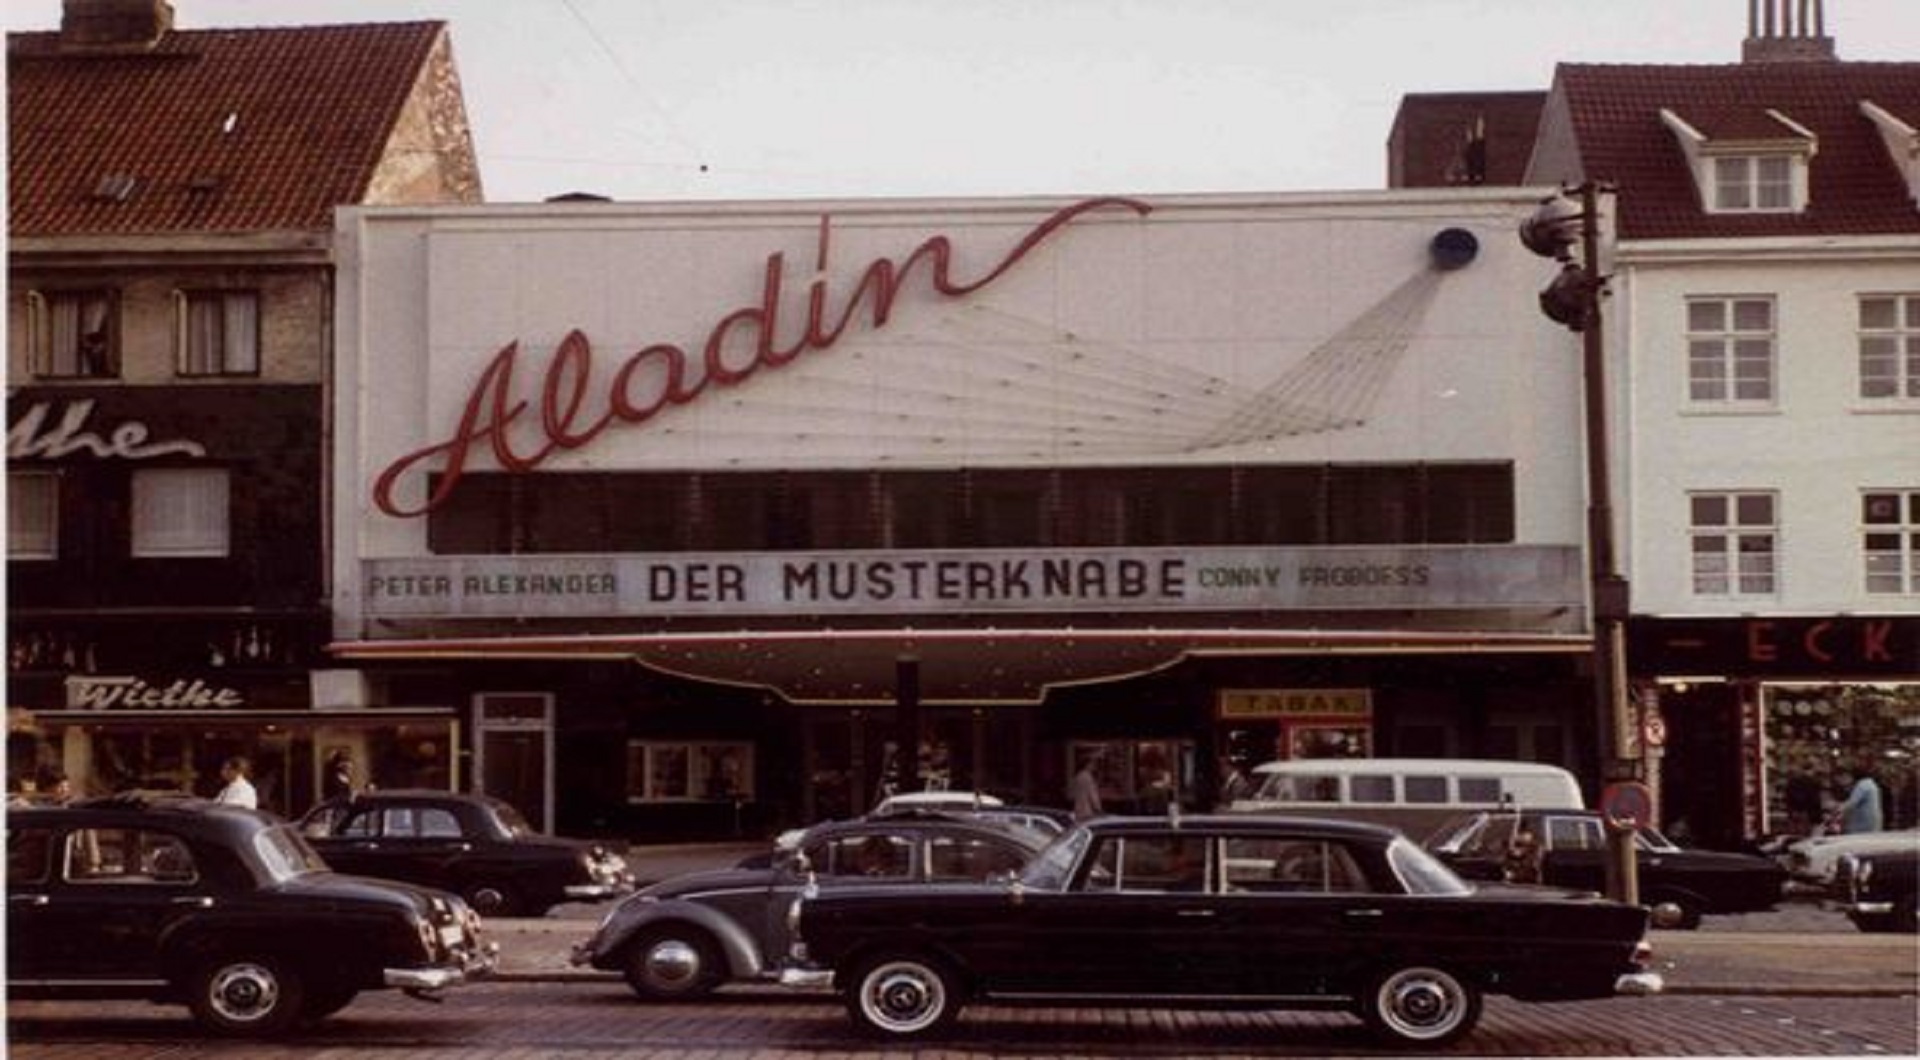 Aladin Kino auf der Reeperbahn1960